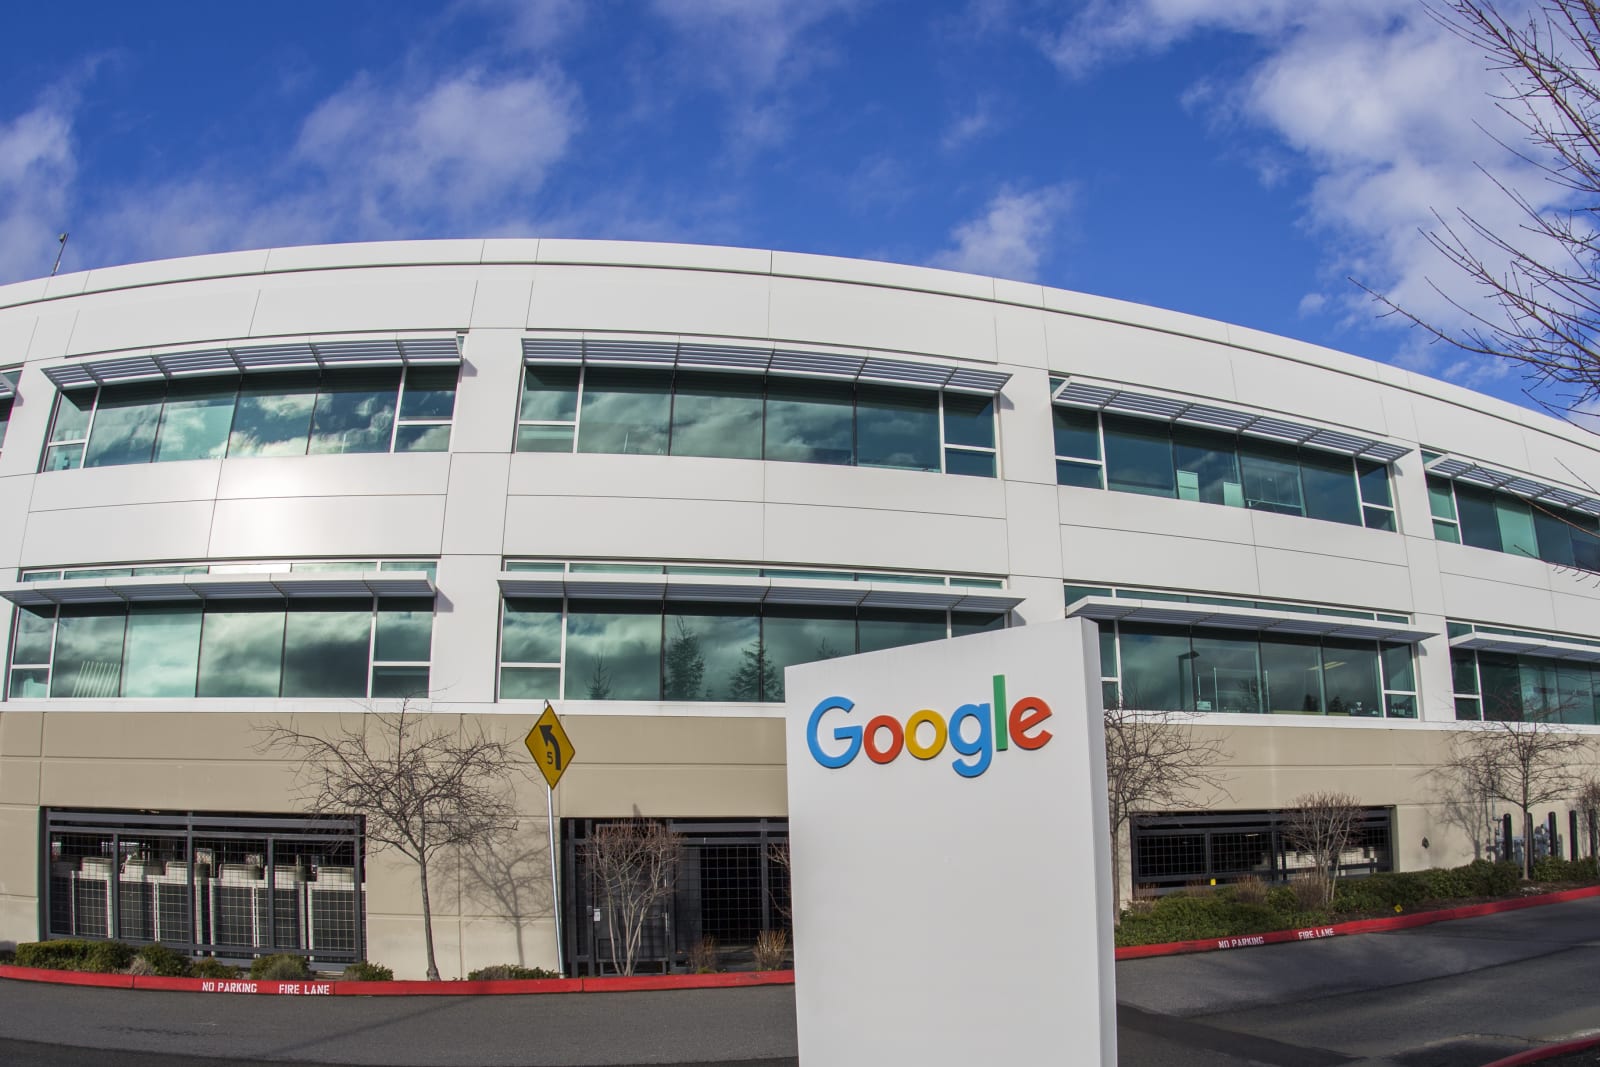 Fisheye view of a Google building